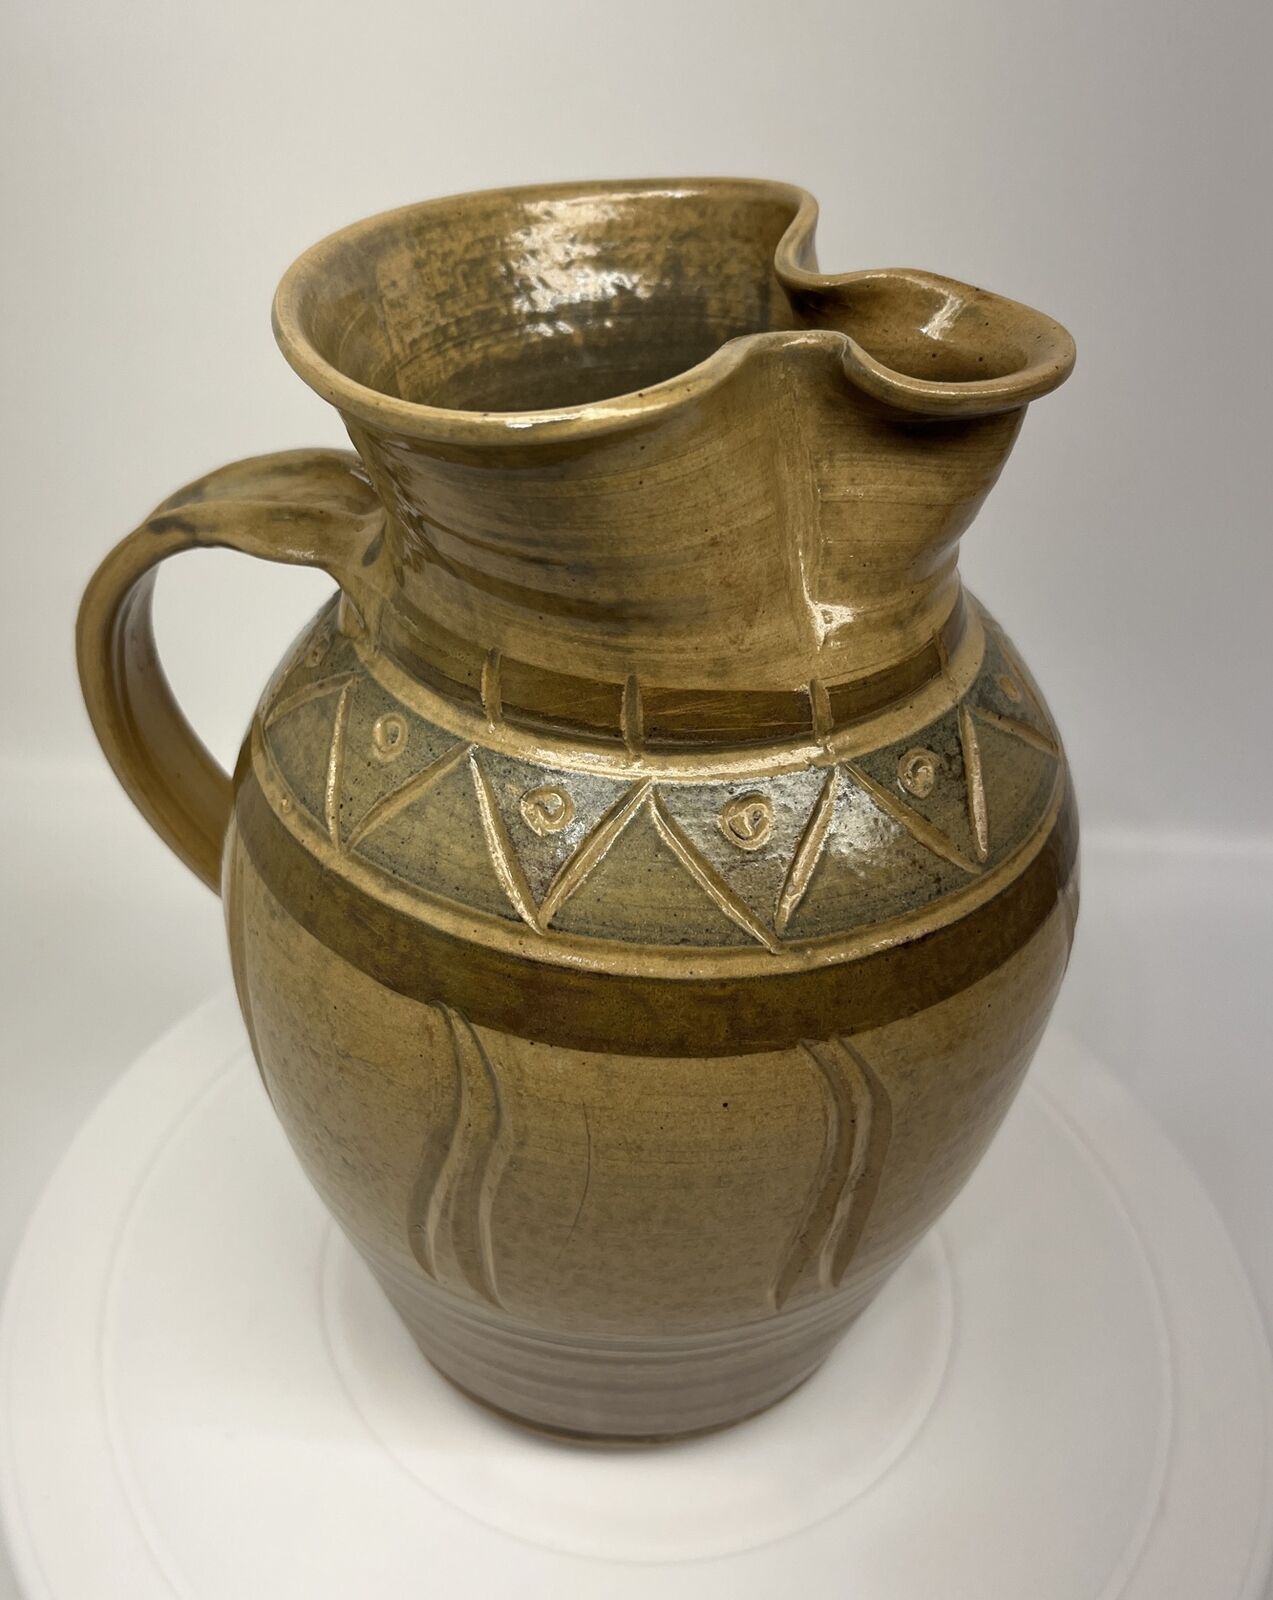 Cariaso Pottery - Hand Thrown Stoneware Pitcher 8.75” X 6”